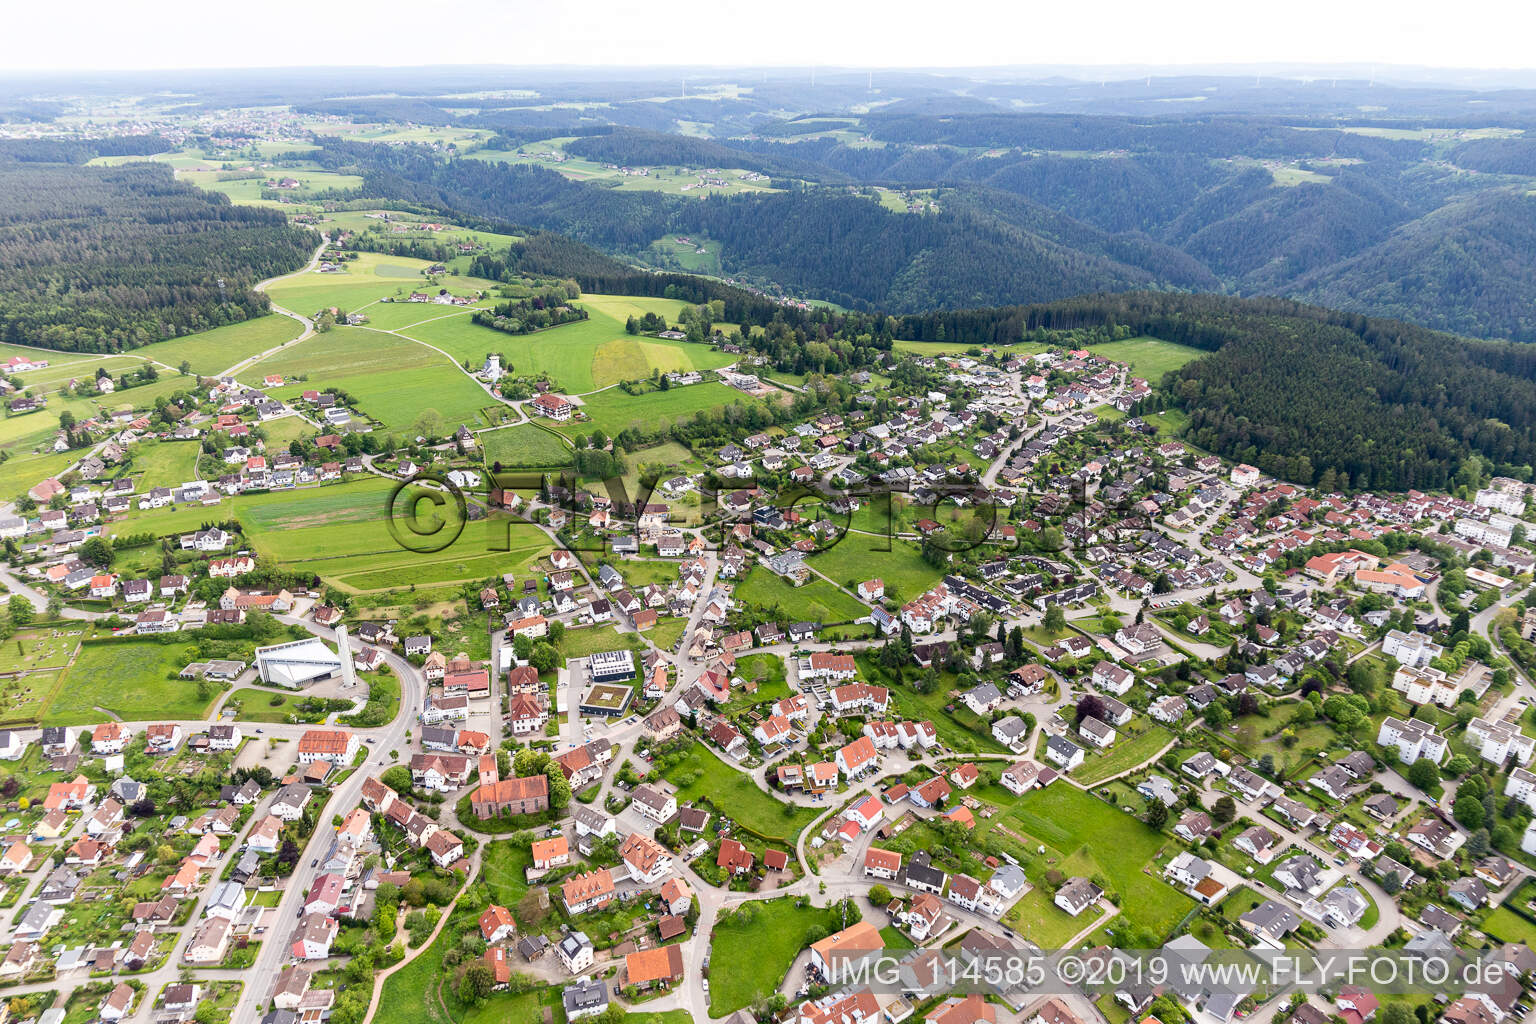 Schramberg dans le département Bade-Wurtemberg, Allemagne vue d'en haut